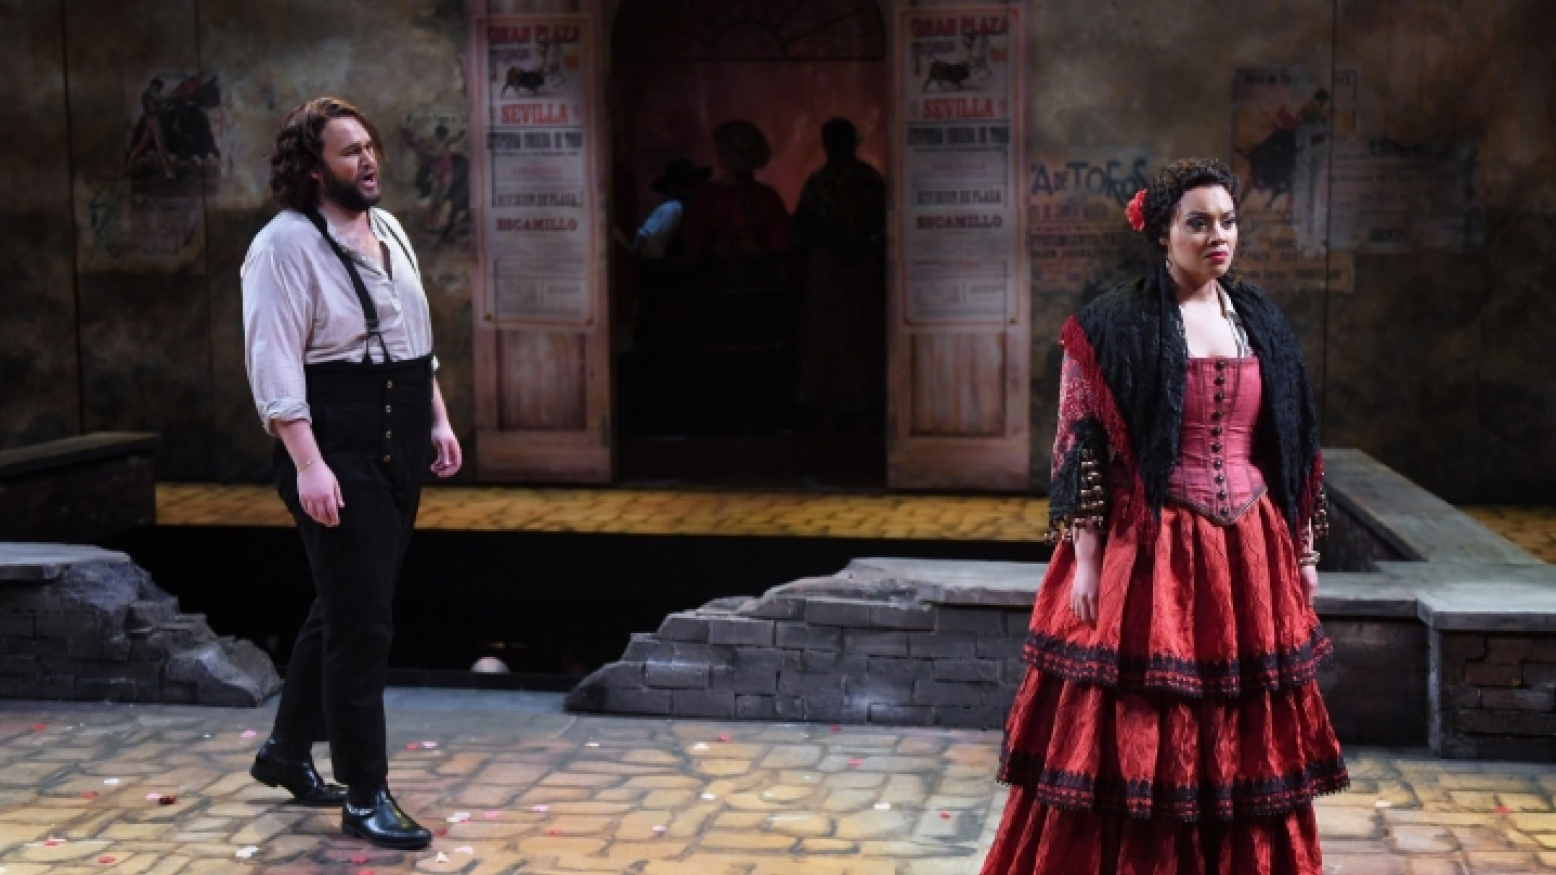 Matthew Cairns as Don José and Taylor Raven as Carmen in Act IV of Bizet's CARMEN; photo by Duane Tinkey